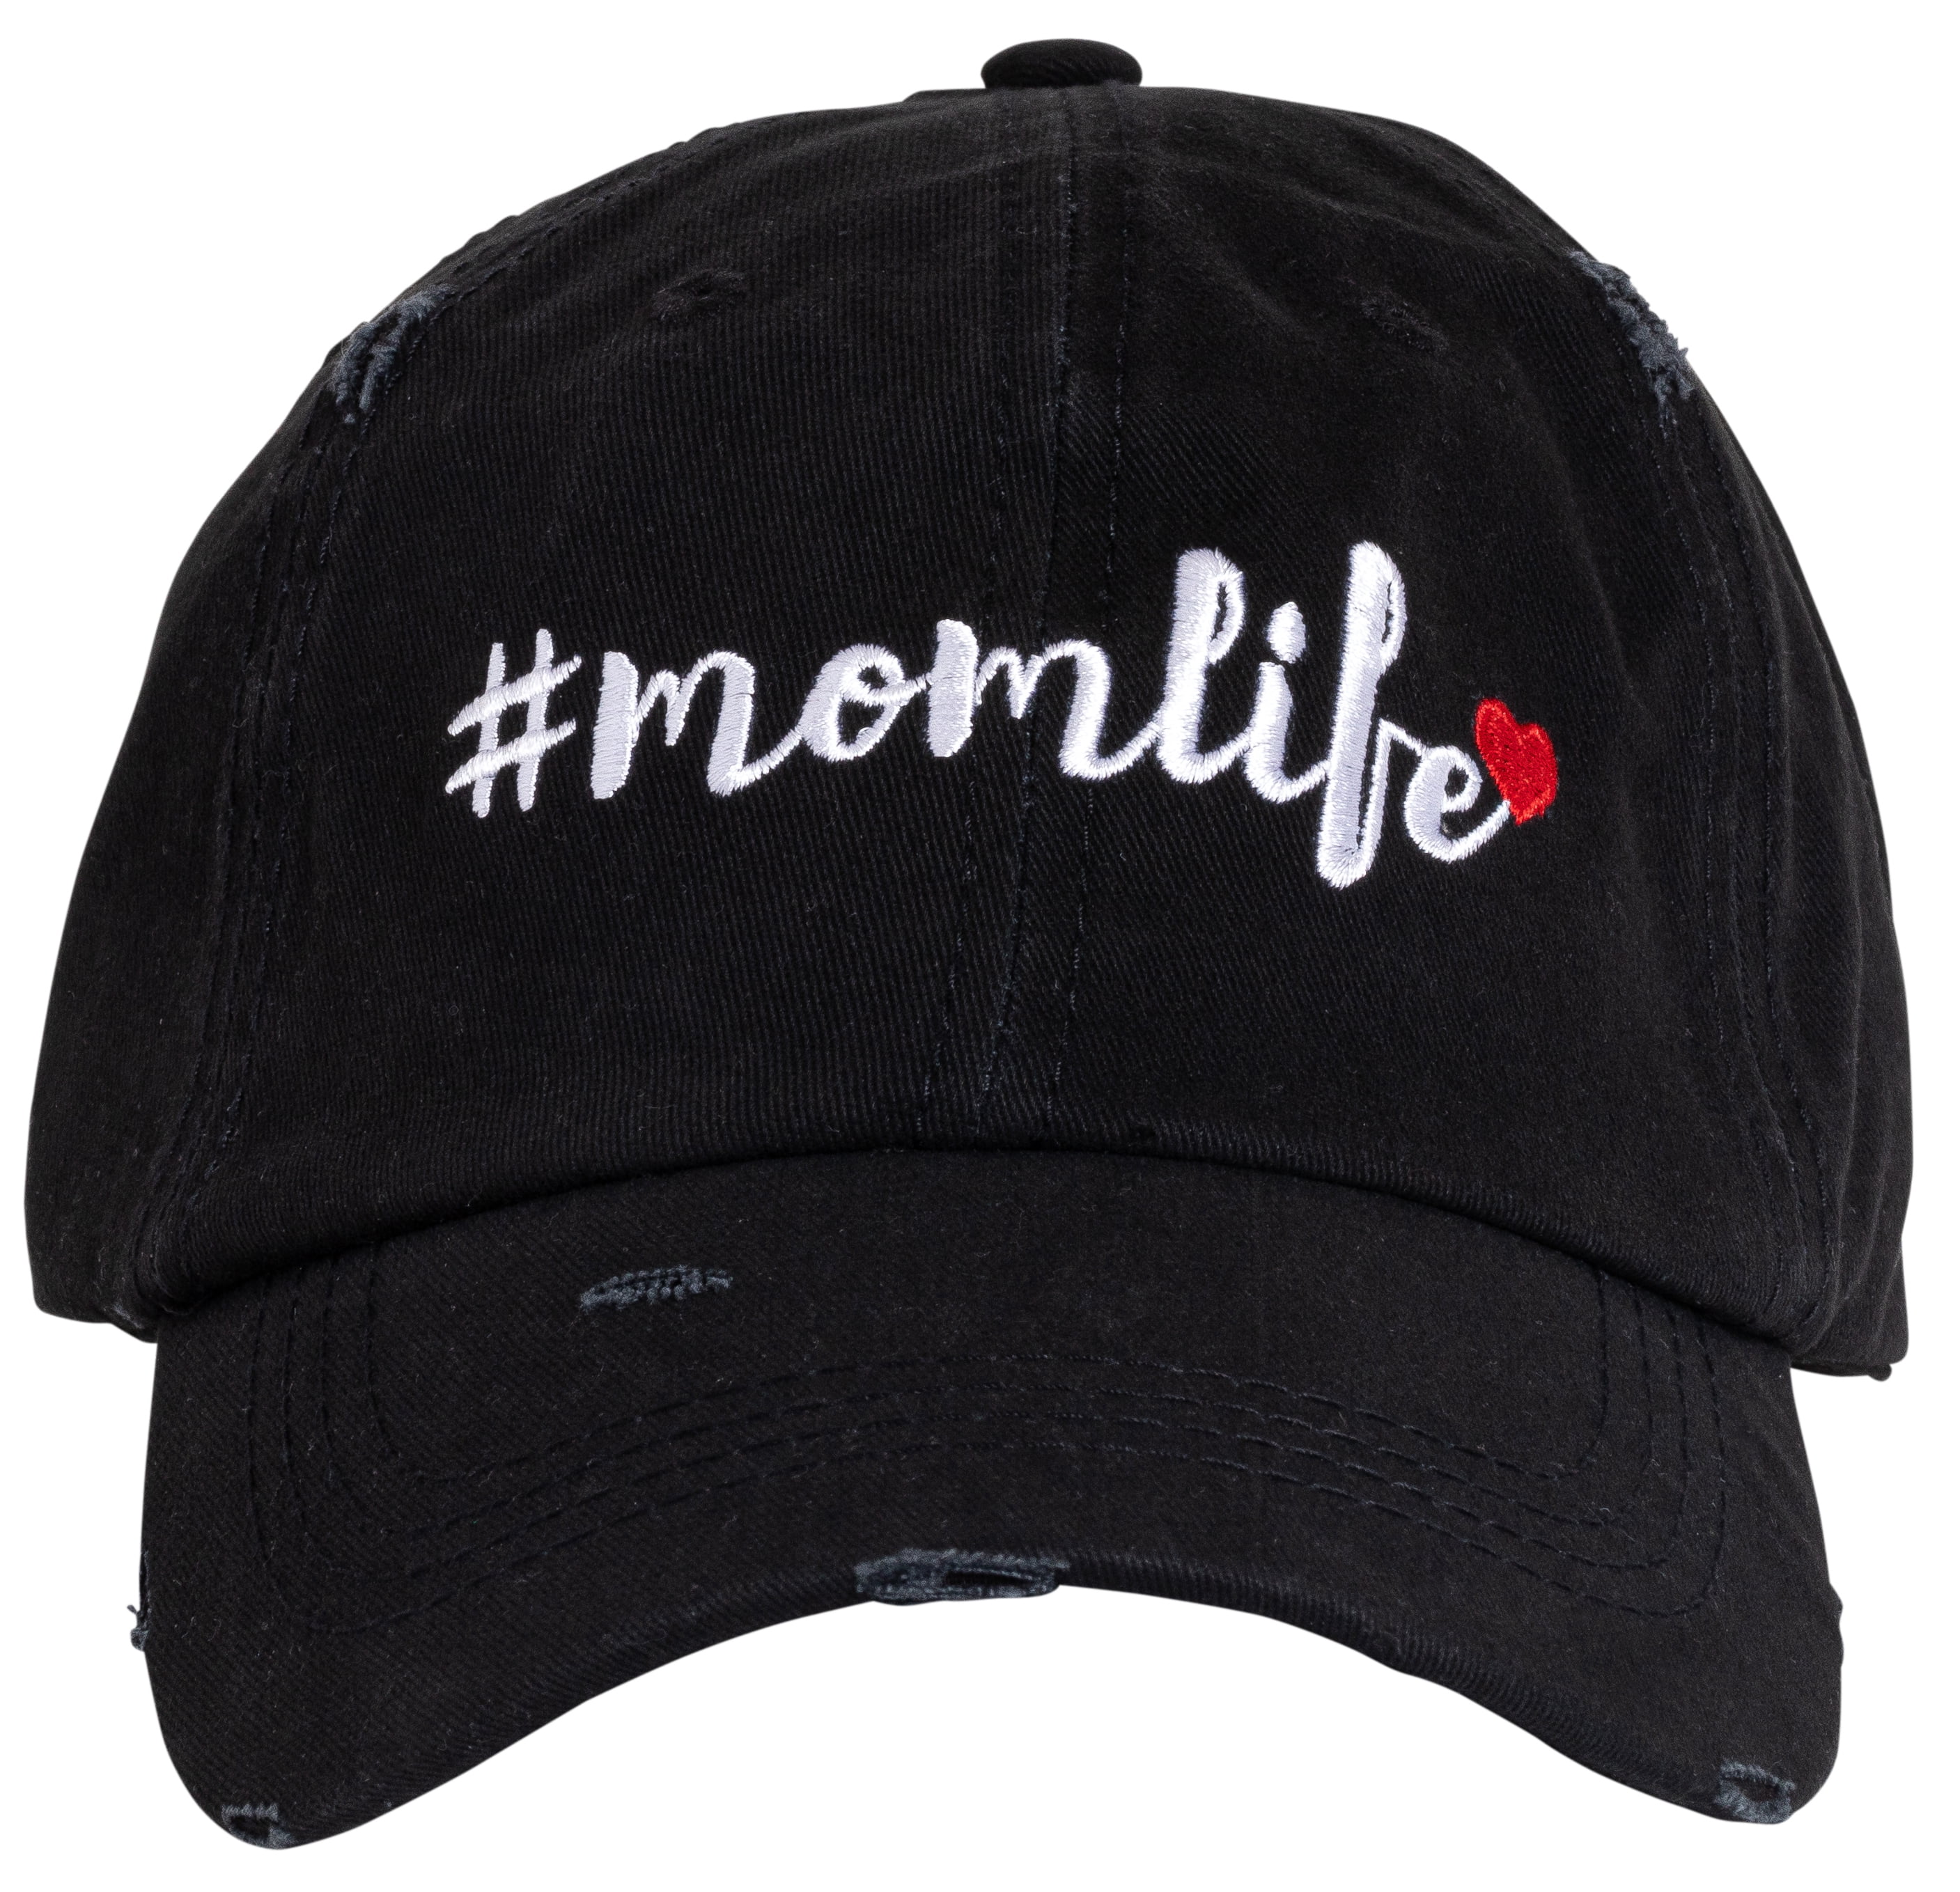 Baseball Cap for Women   Adjustable Embroidered Ponytail Hat Says “MomLife”    Black